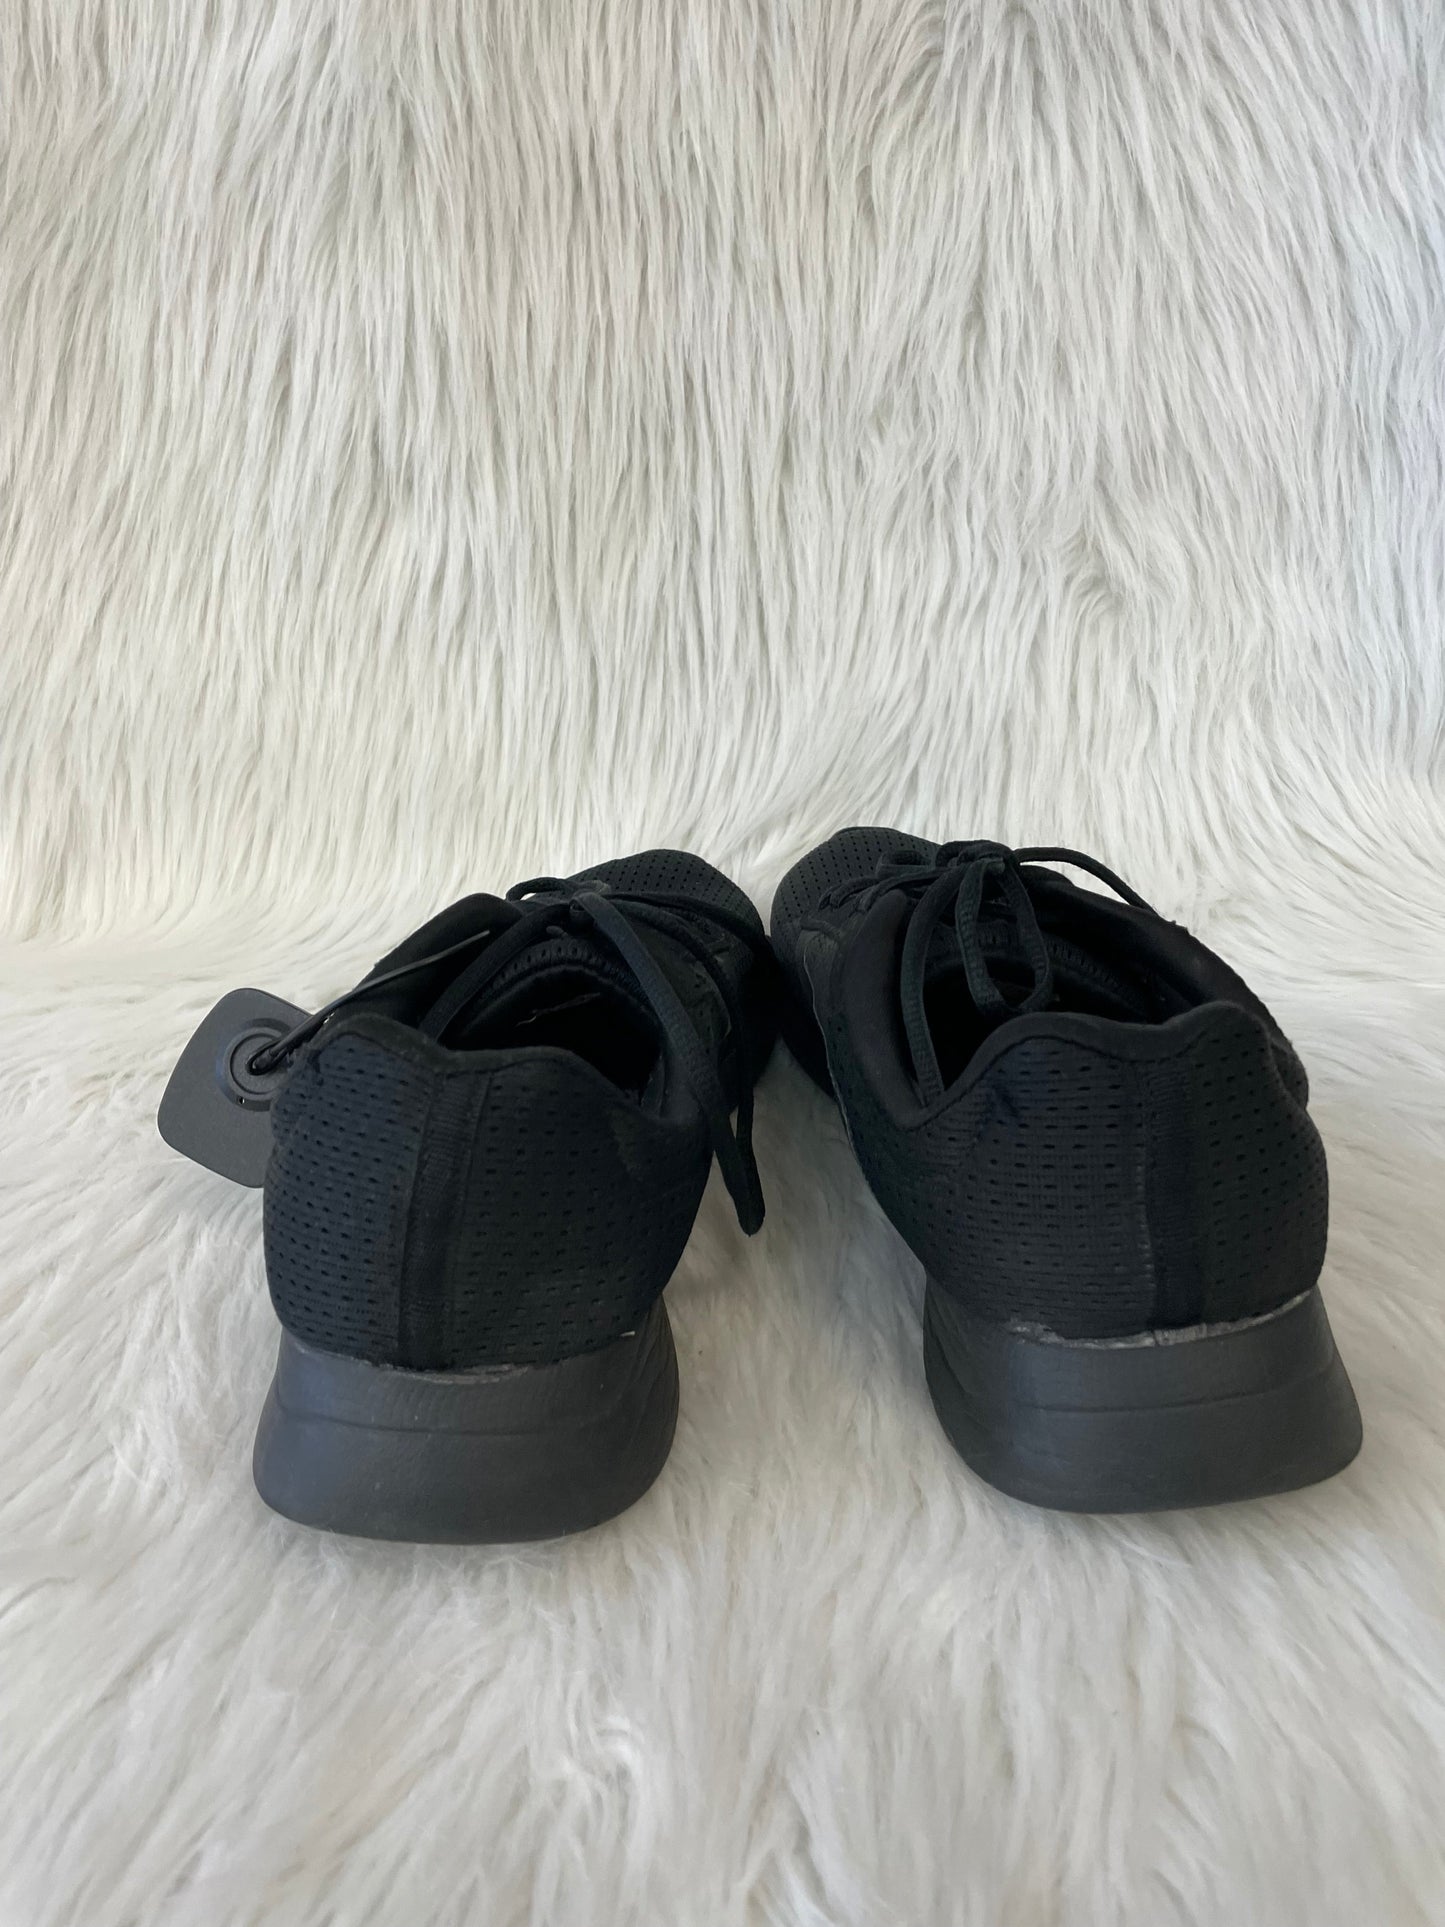 Black Shoes Athletic Clothes Mentor, Size 9.5